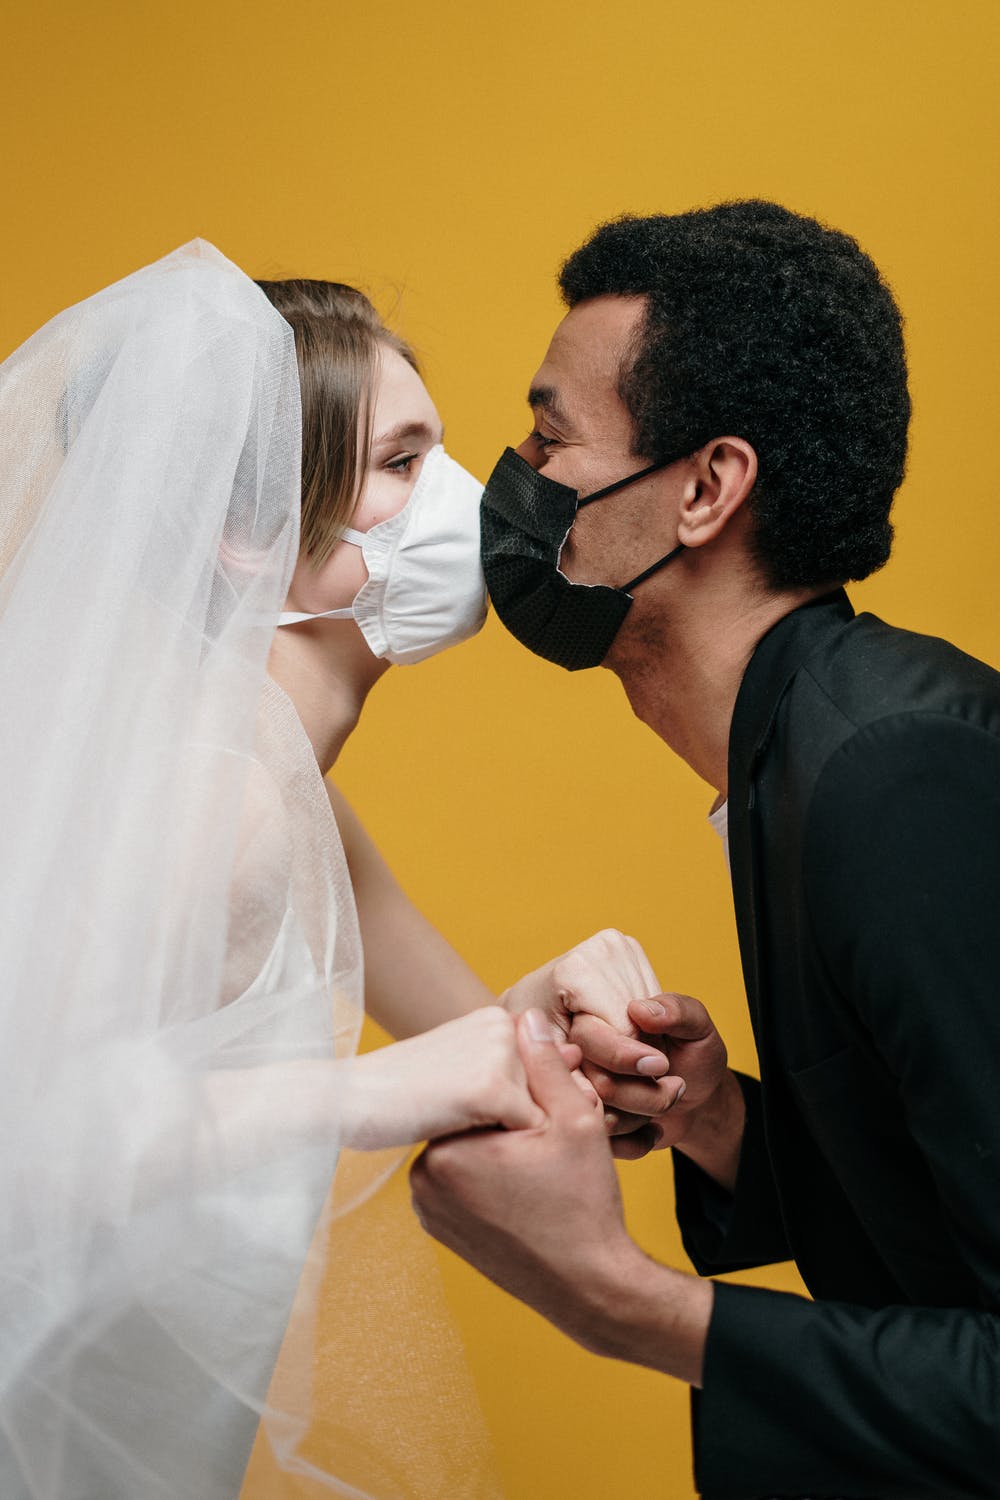 Bits of Advice for wedding arrangement during Coronavirus